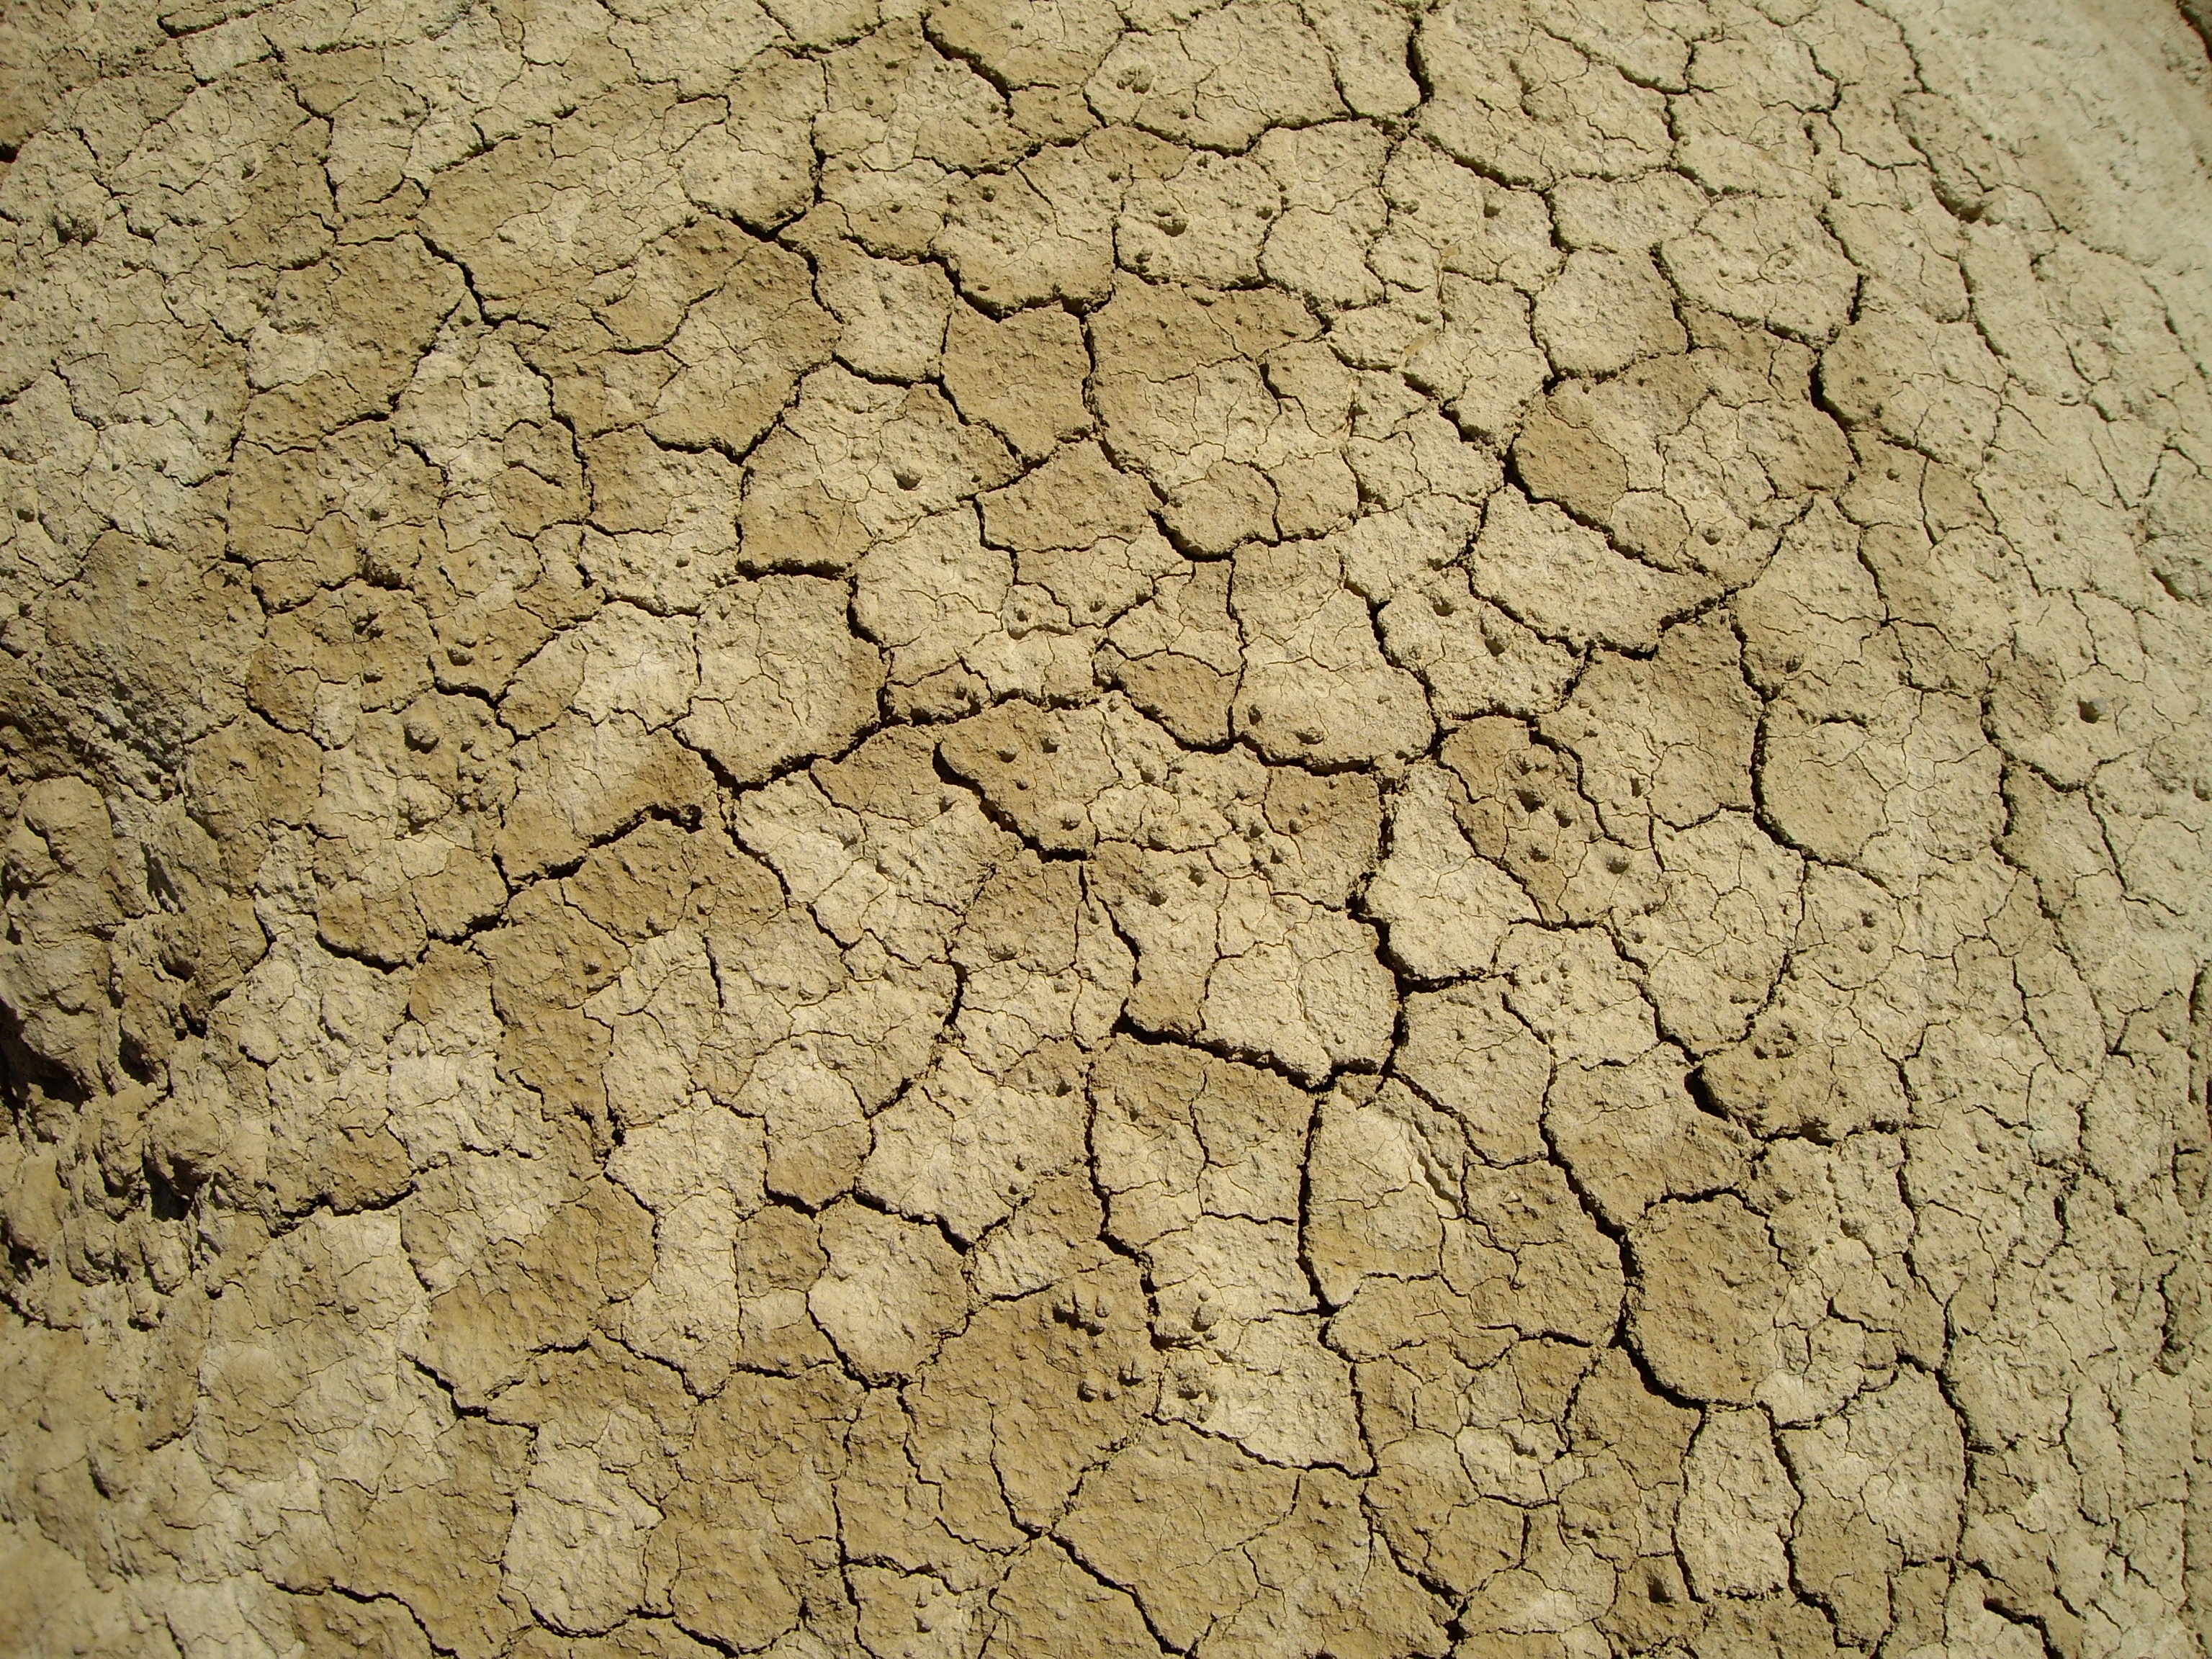 Drought, Desert, Ground Cracked, Summer, cracked, drought